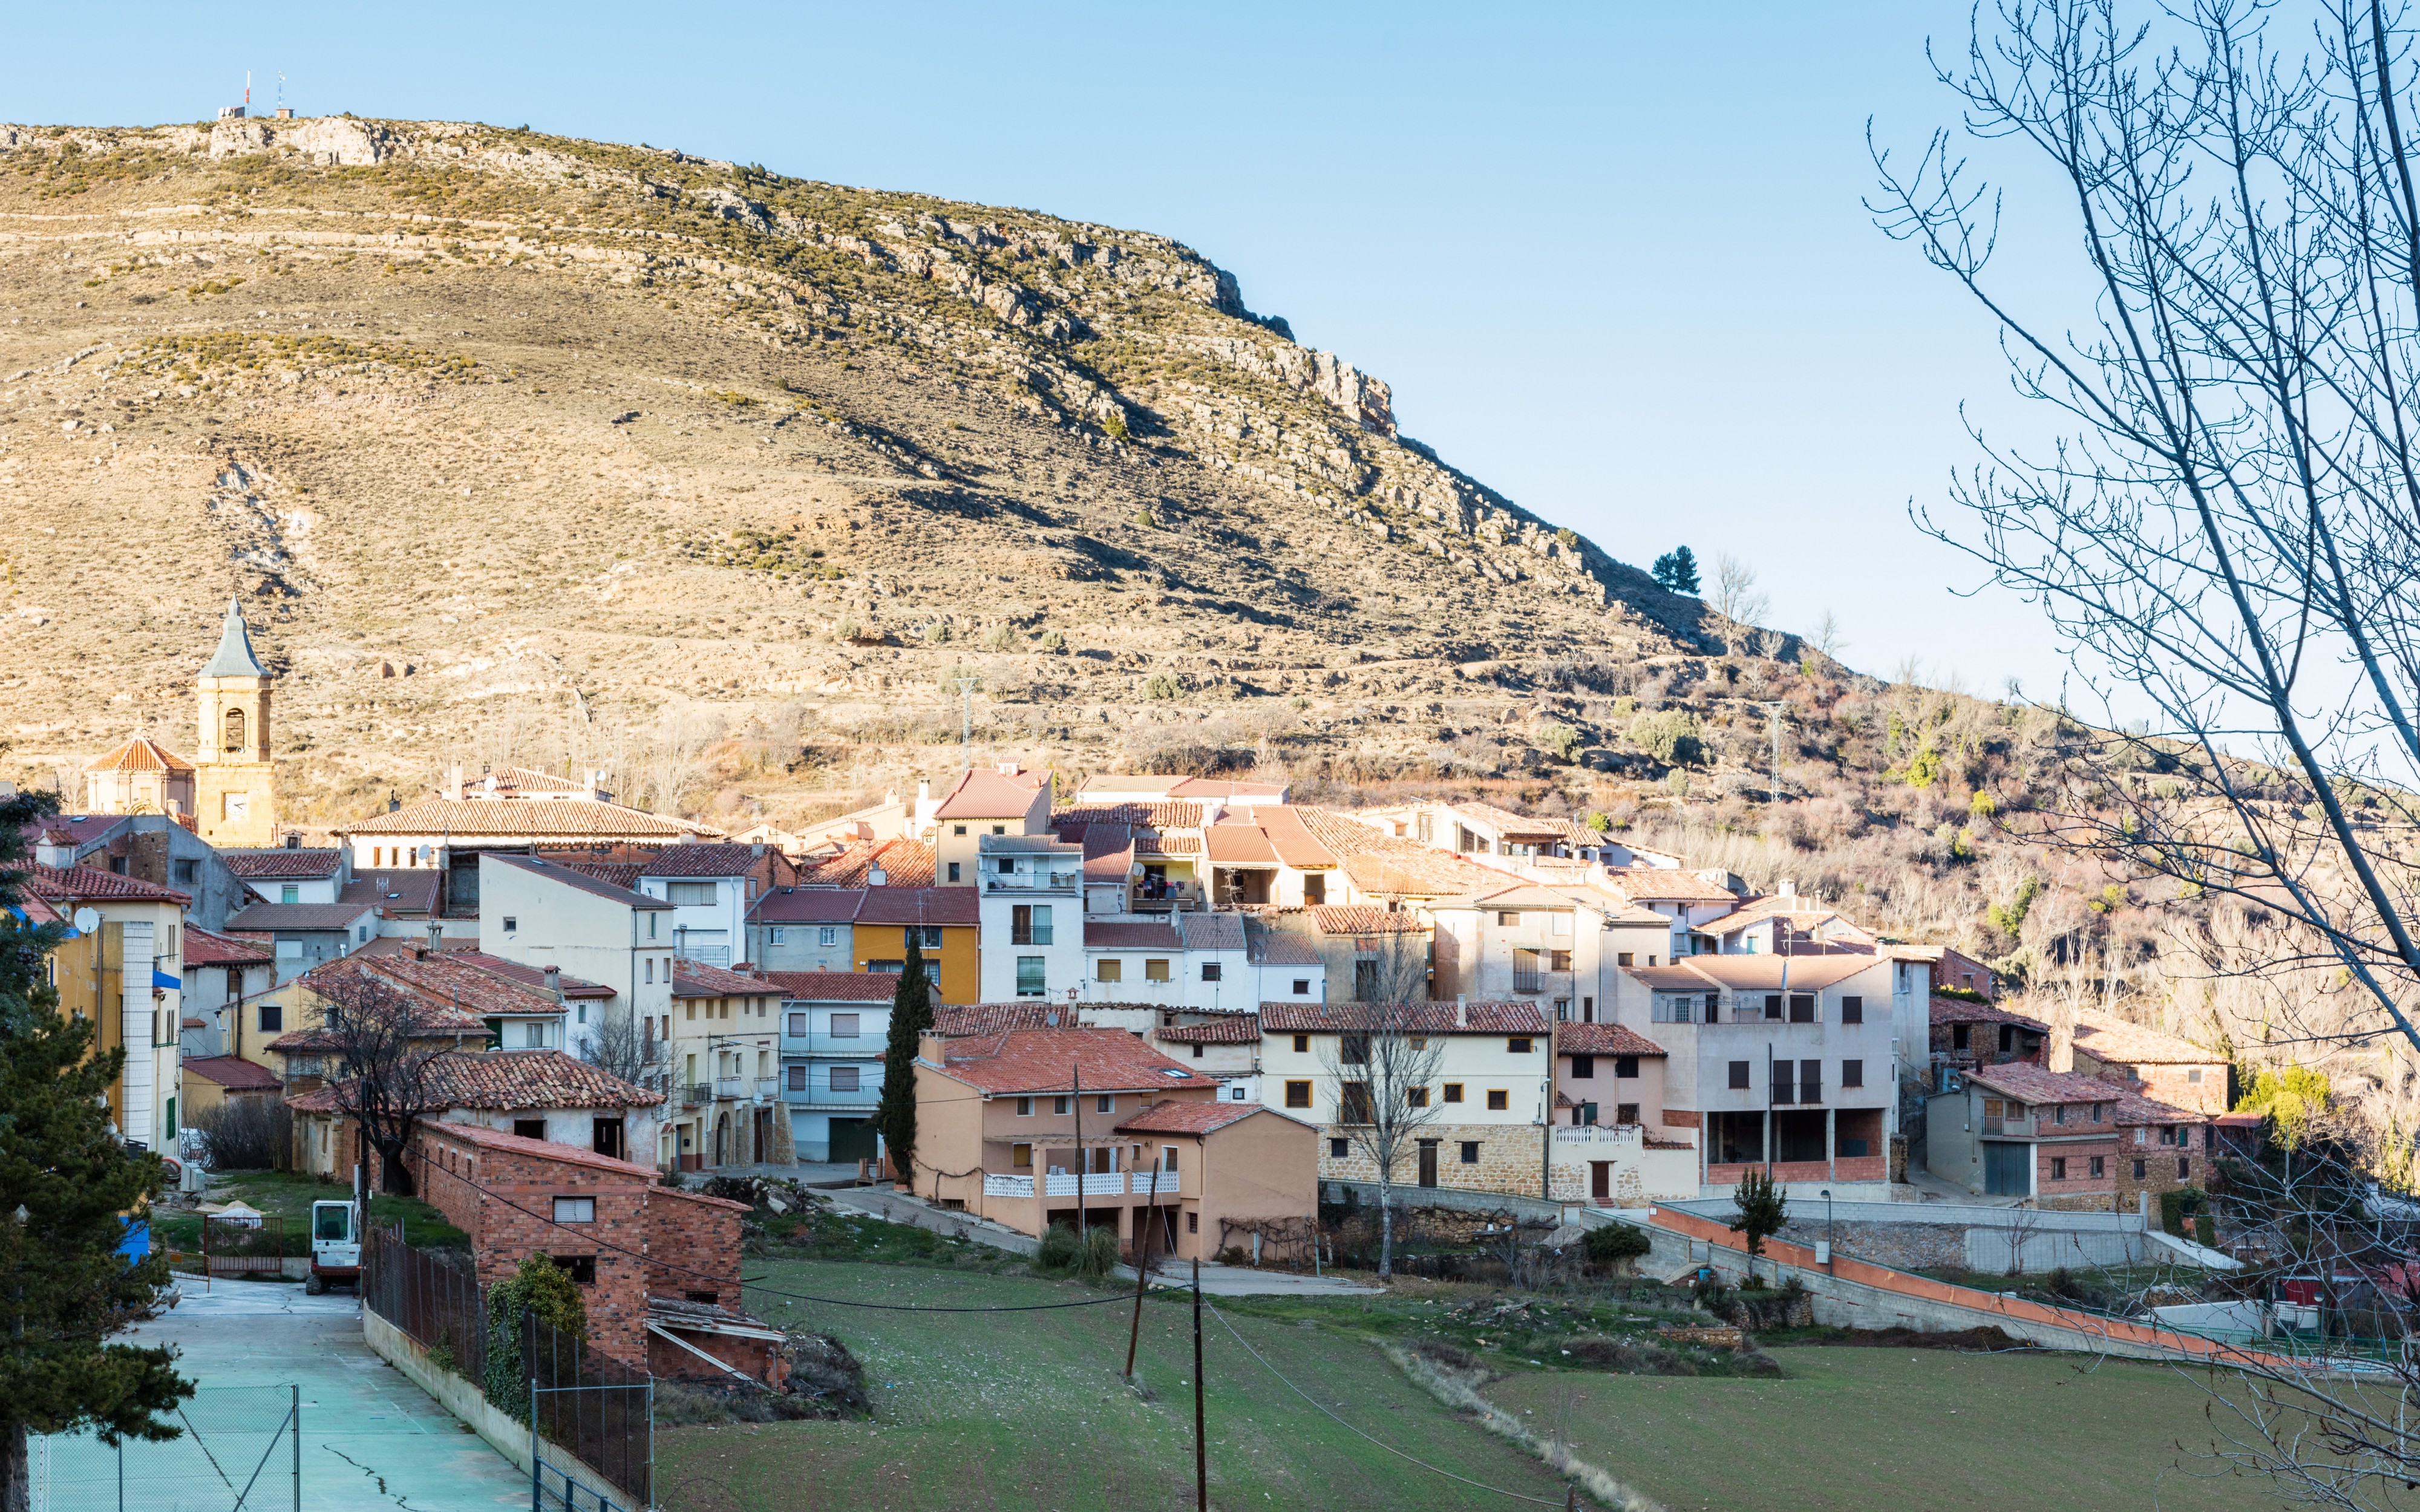 Cañizar del Olivar, Teruel, España, 2017-01-04, DD 90